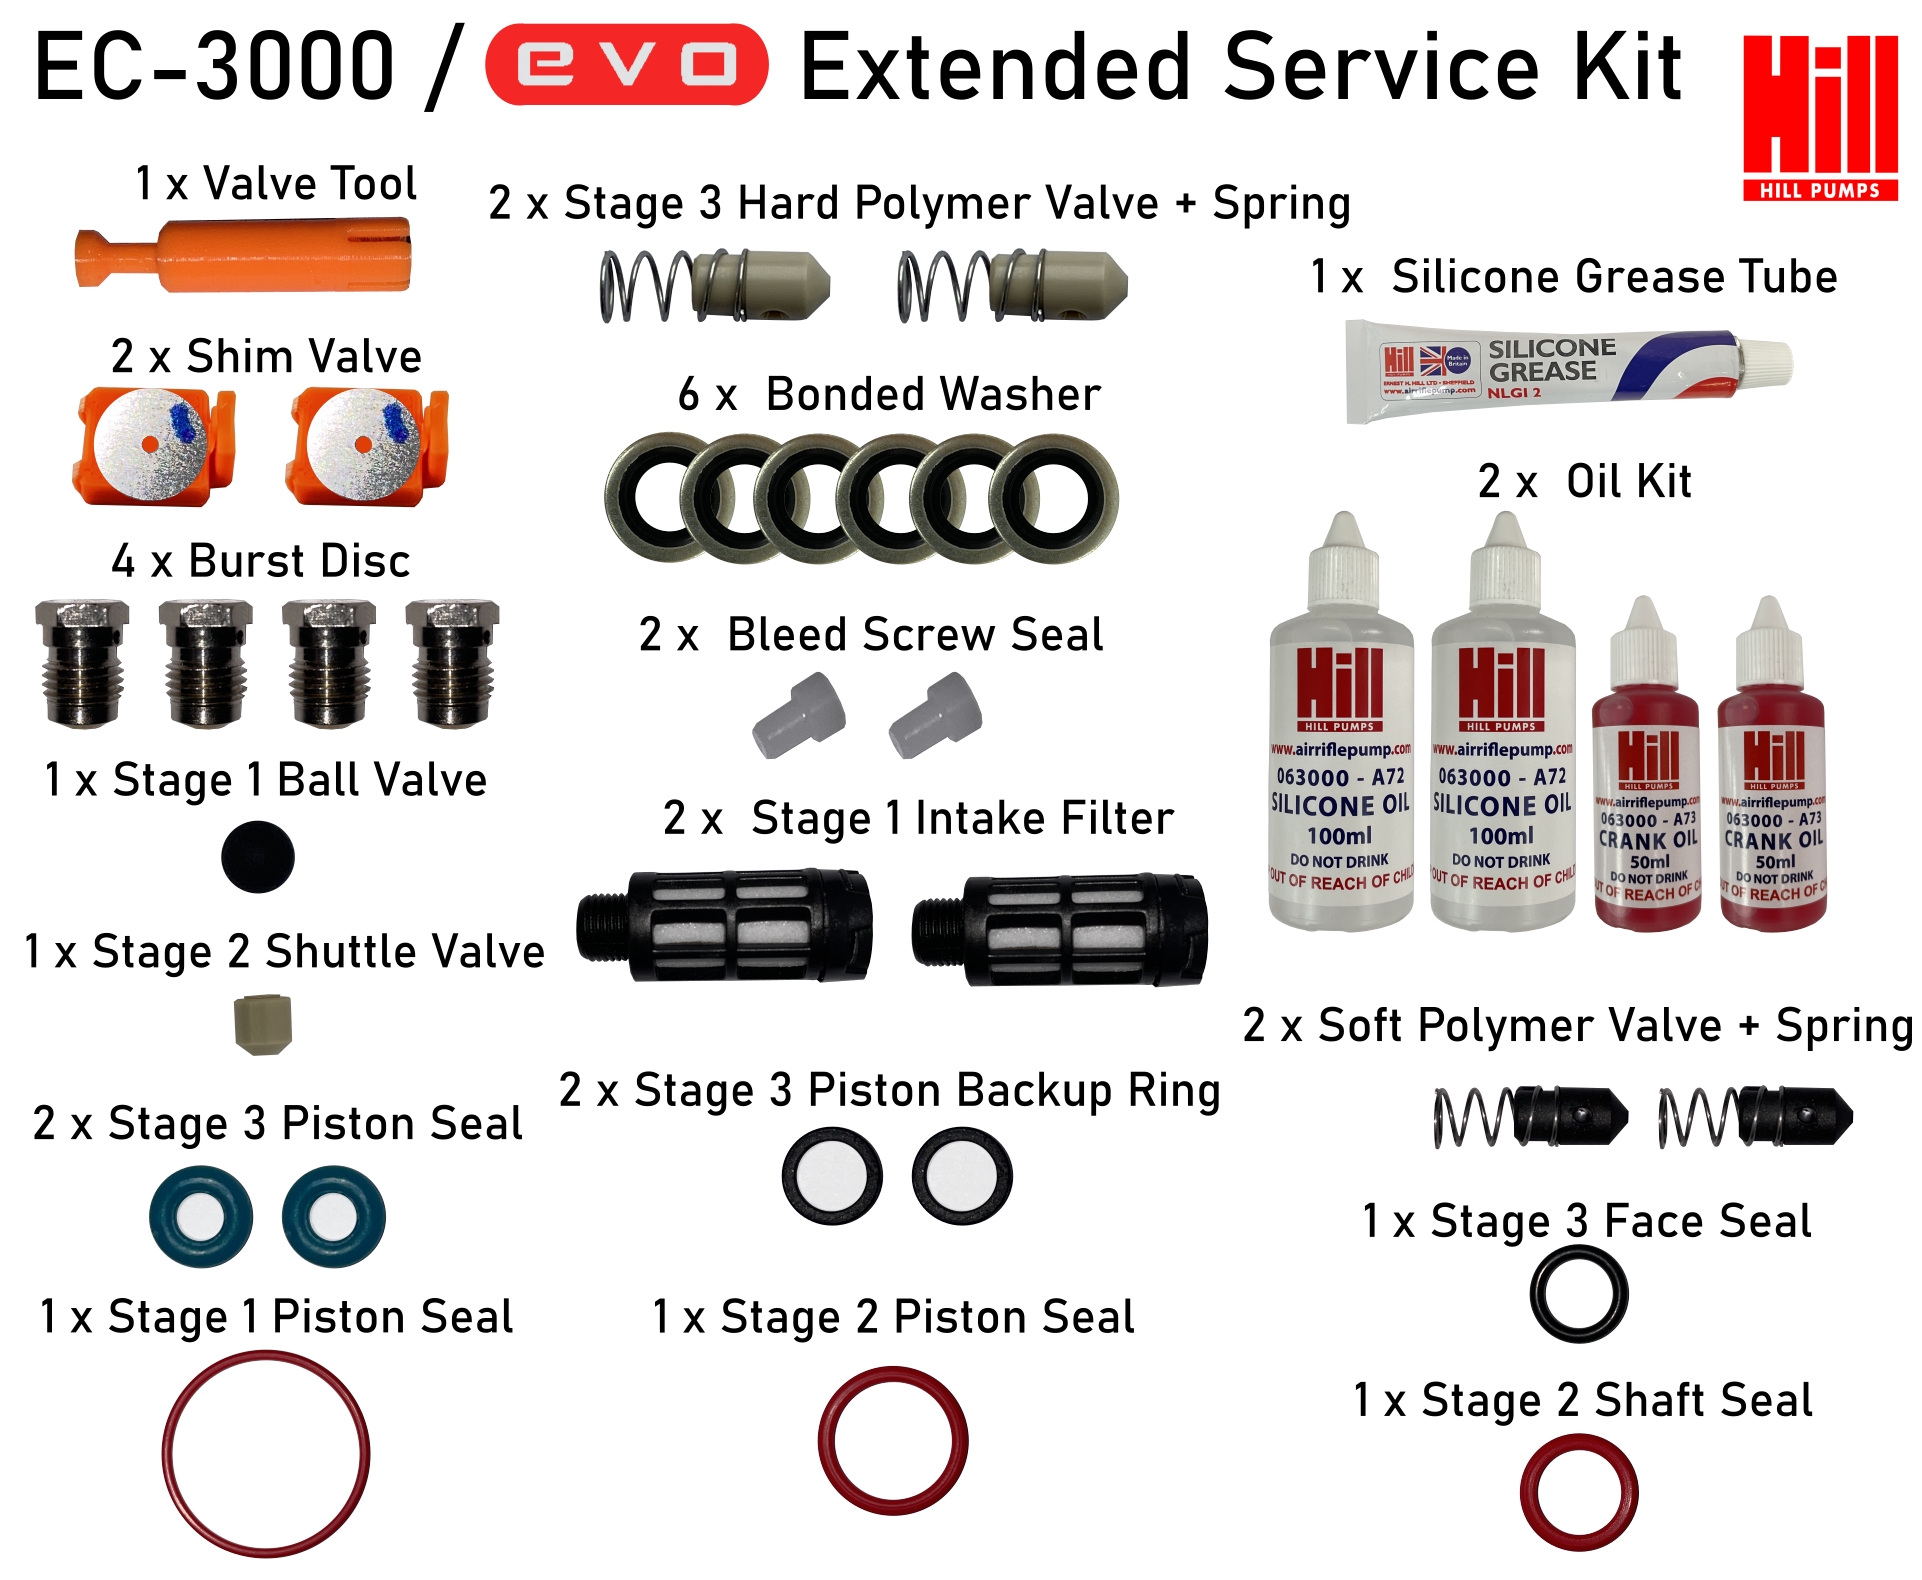 EC-3000 / Evo Extended Service Kit